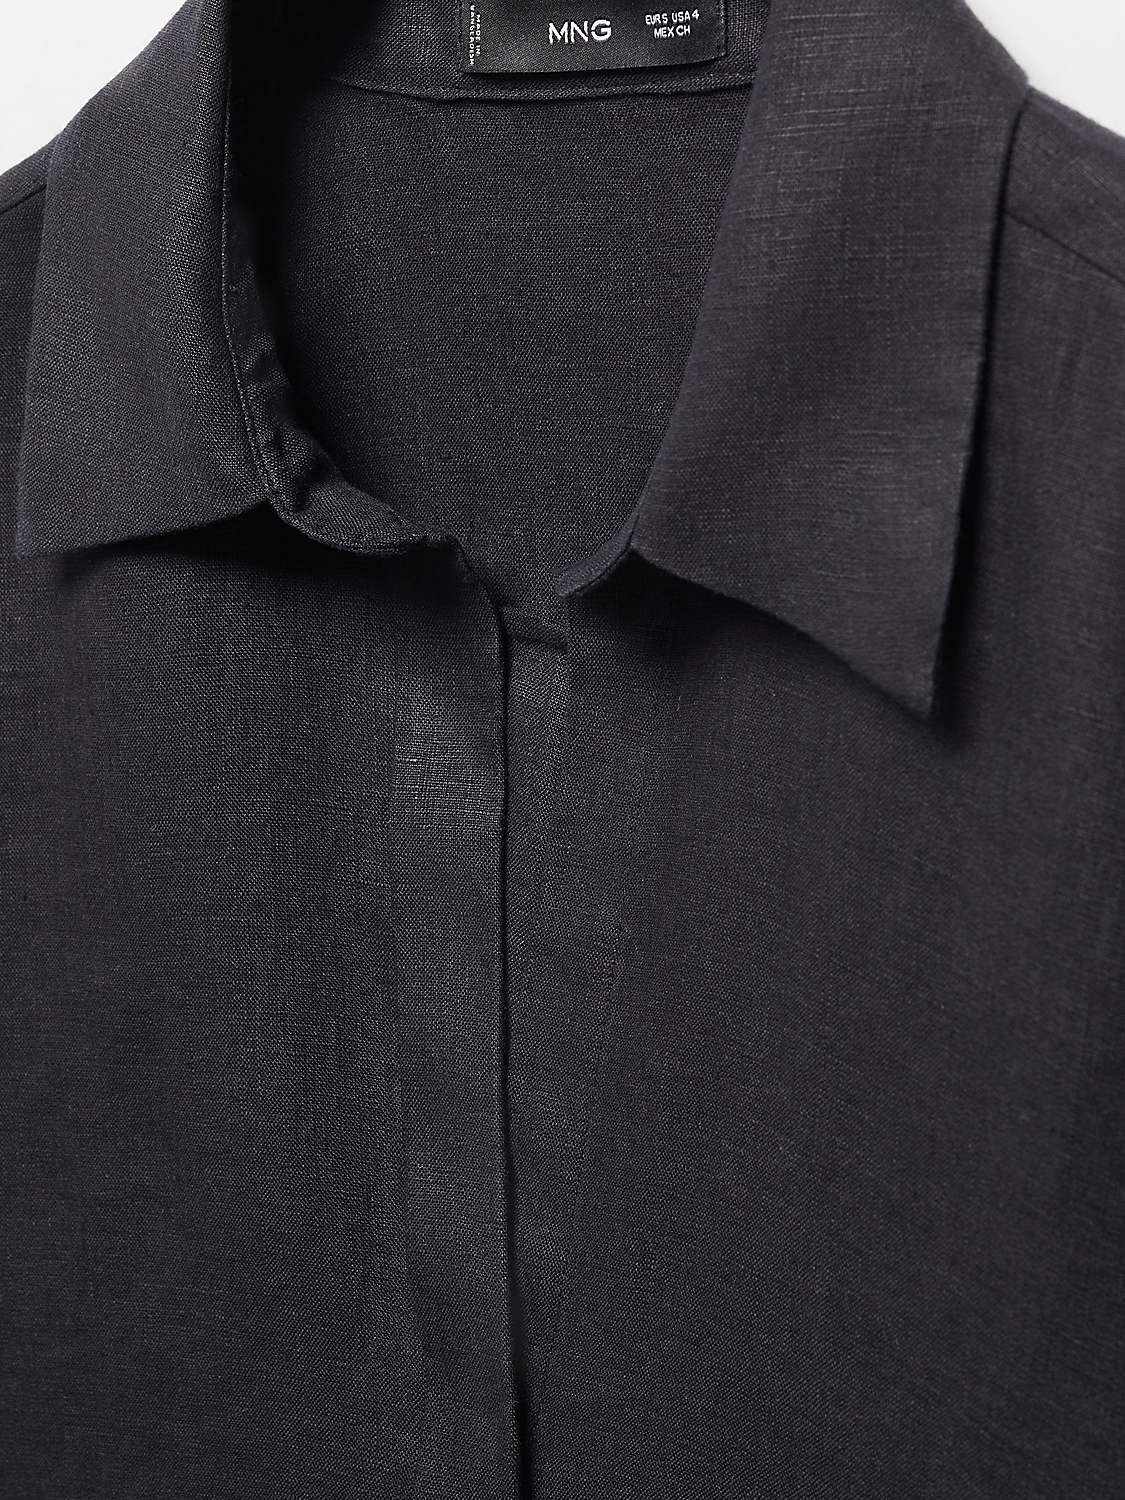 Buy Mango Samara Linen Shirt, Black Online at johnlewis.com